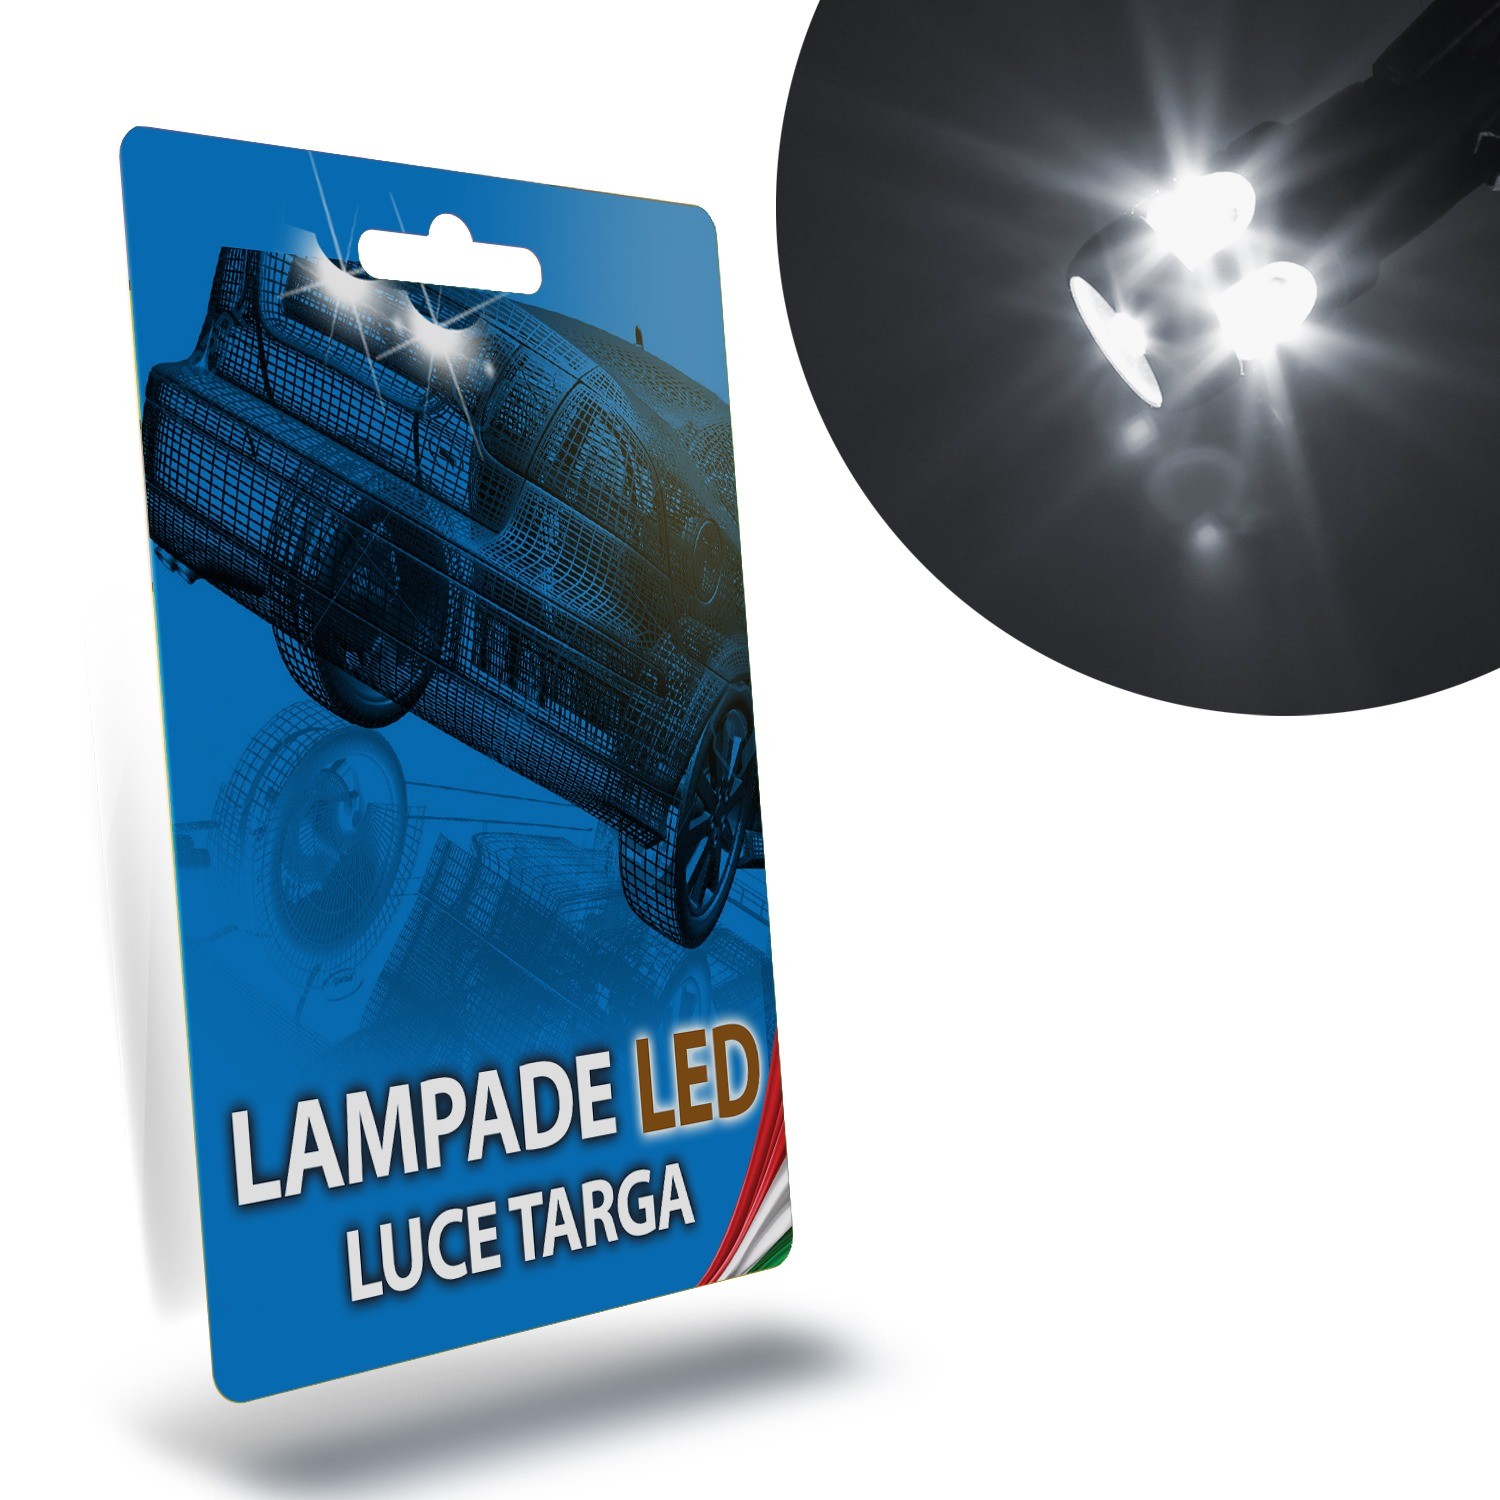 LAMPADE LED LUCI TARGA per AUDI TT (FV) specifico serie TOP CANBUS